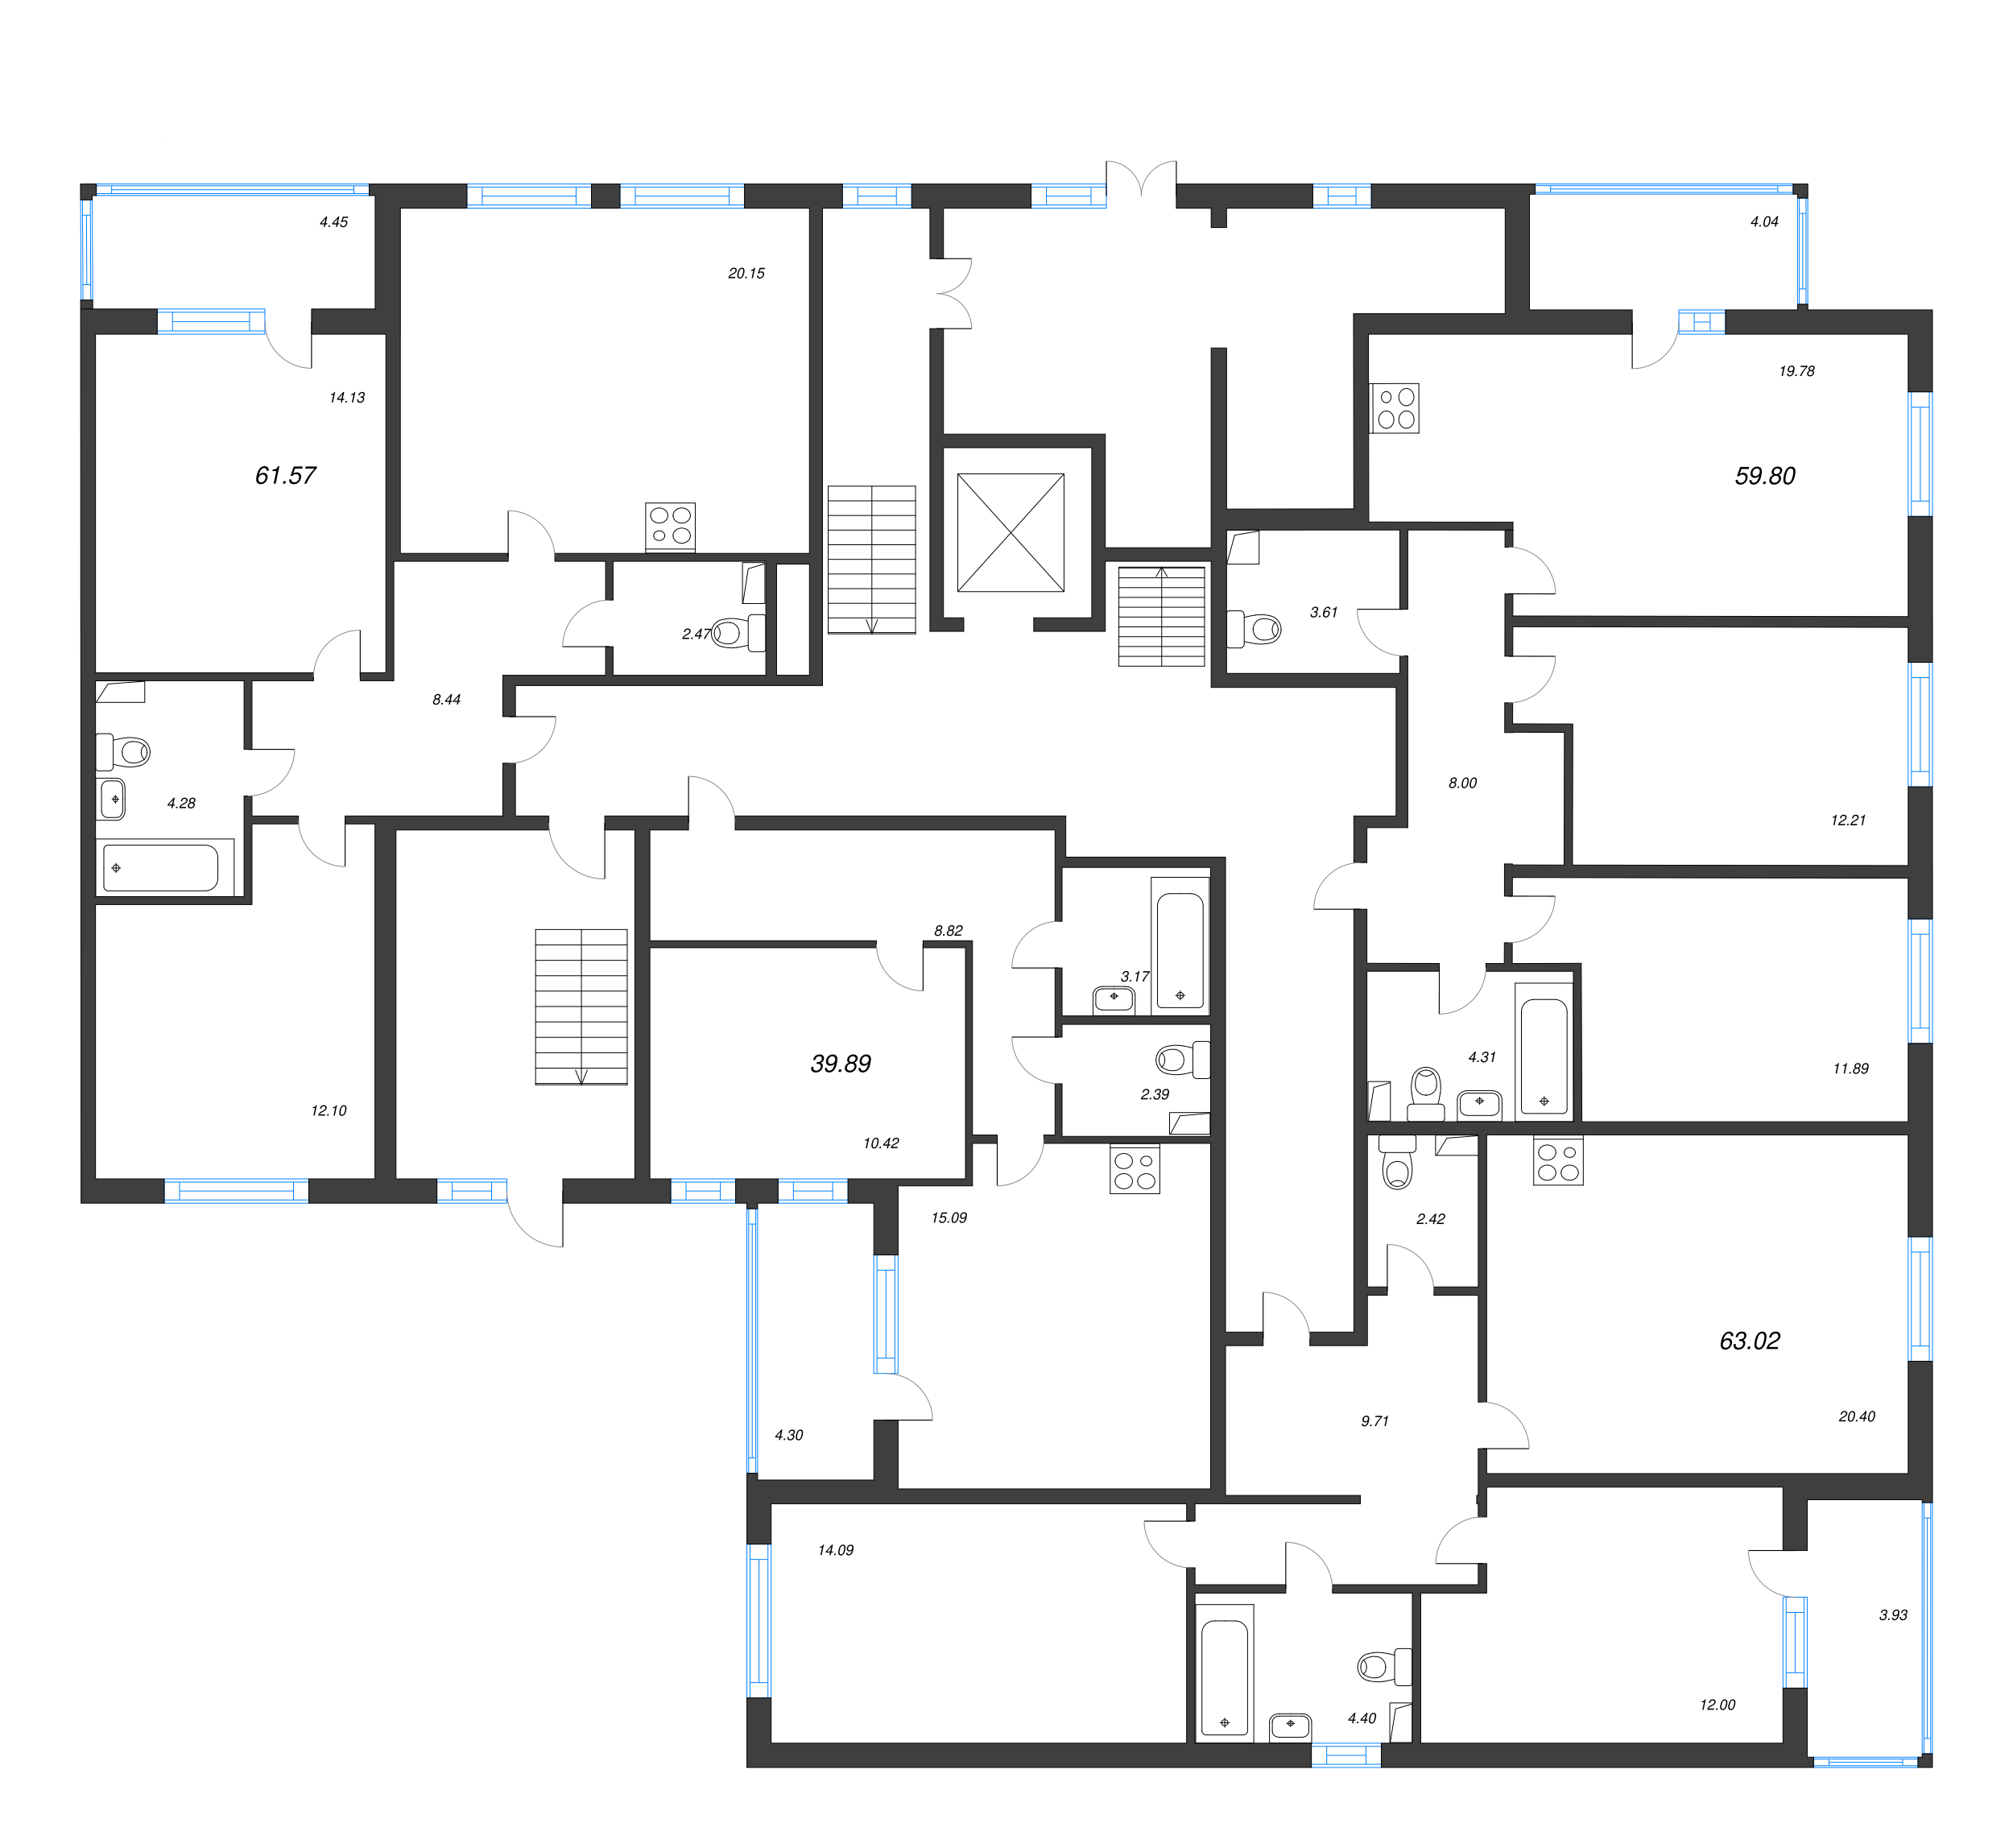 2-комнатная (Евро) квартира, 39.89 м² - планировка этажа